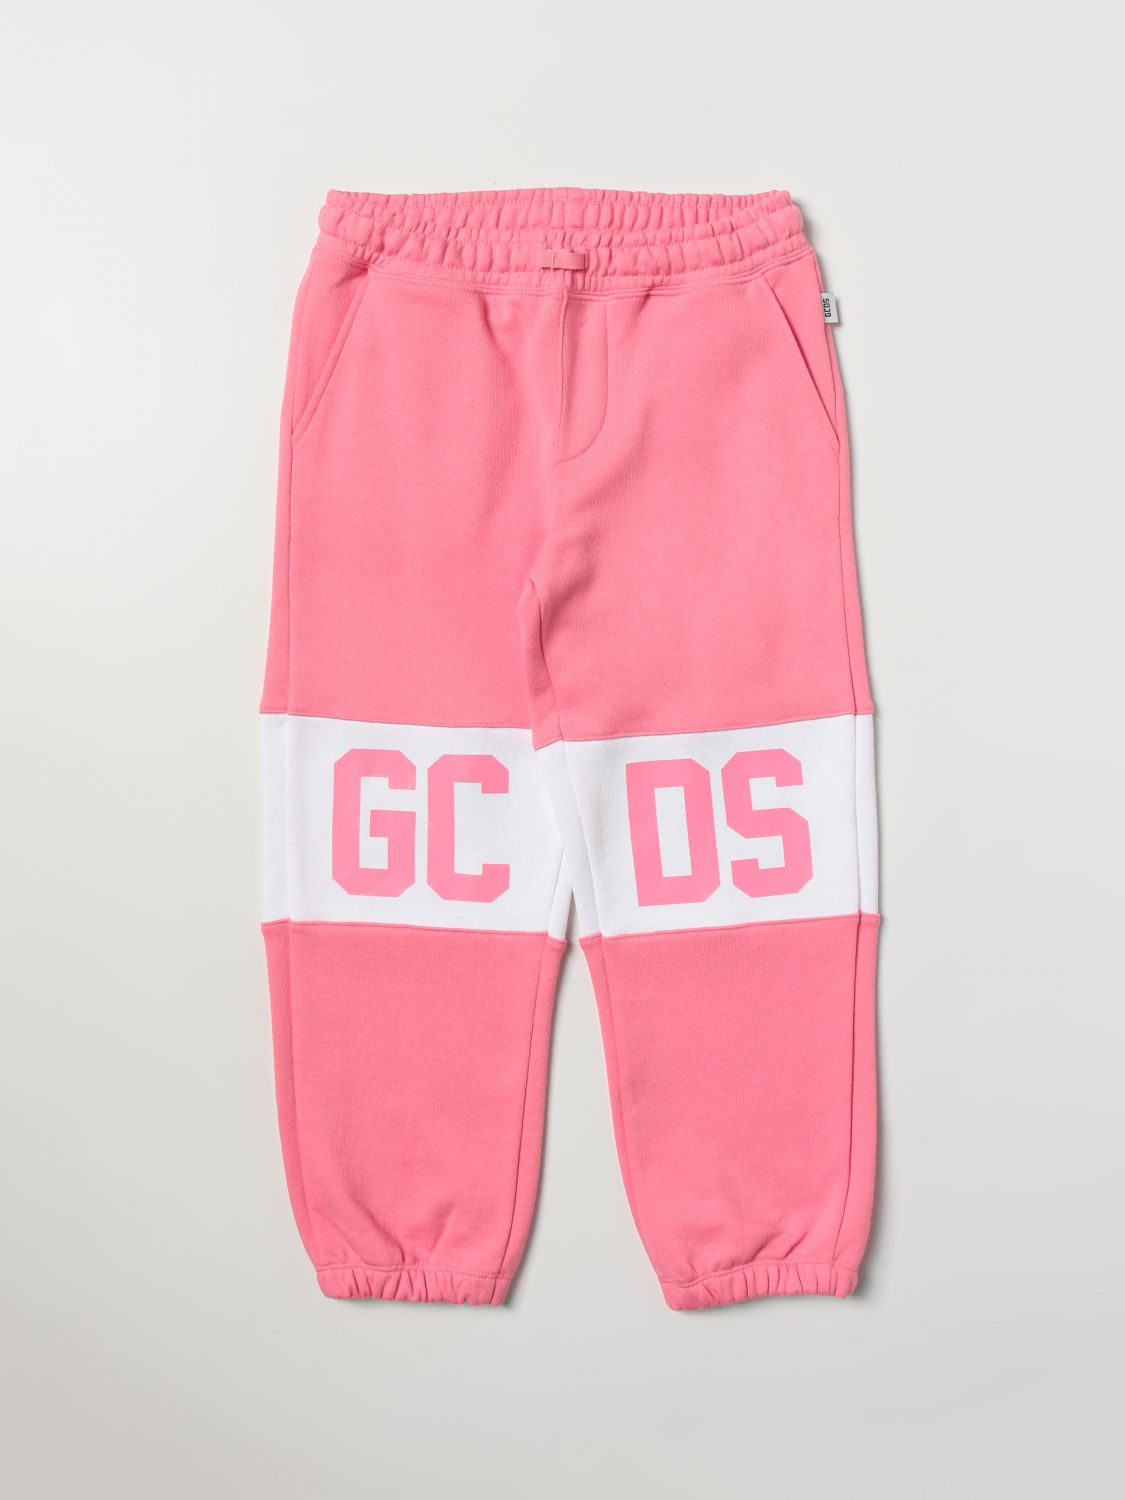 Gcds Pants  Kids Kids Color Pink